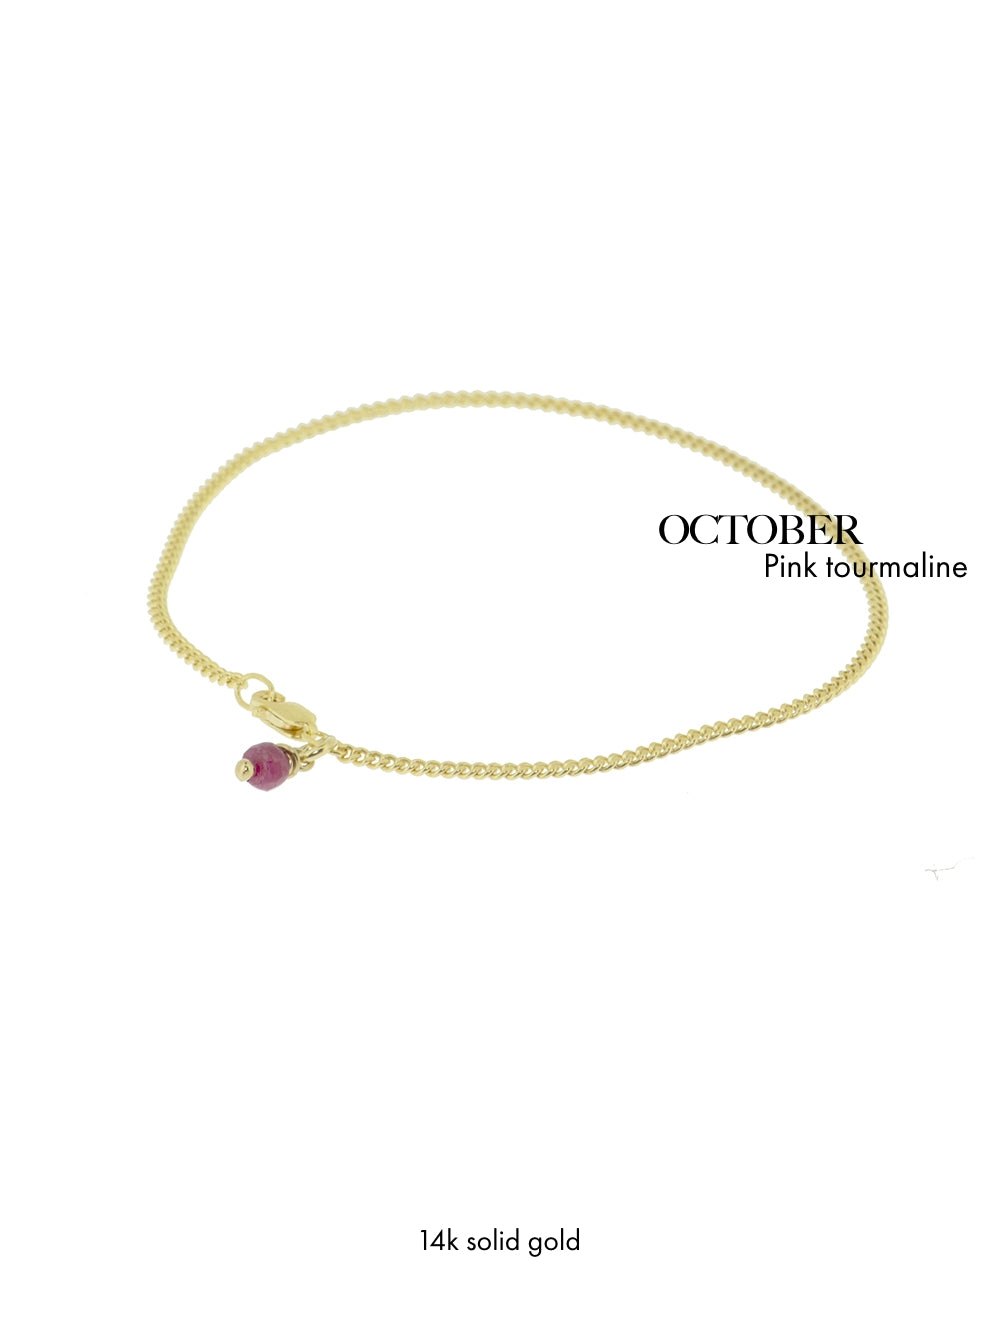 Birthstone October - Pink Tourmaline | 14K Solid Gold